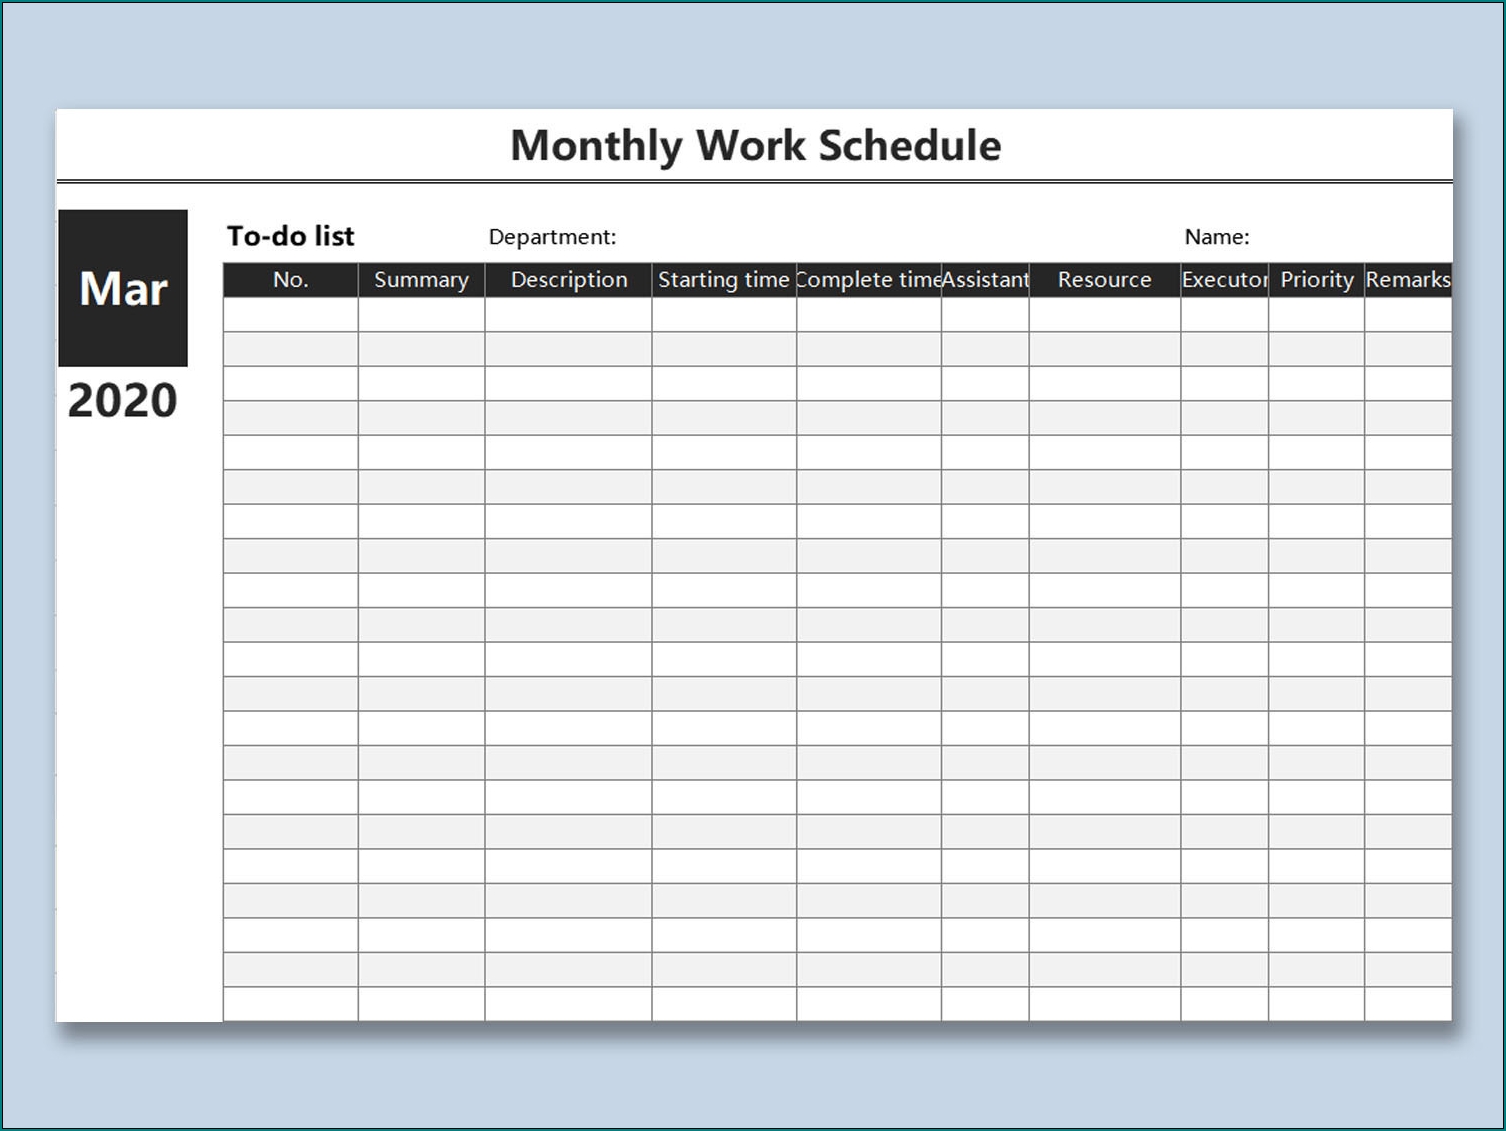 Monthly Employee Schedule Template Pdf Calendar Template 2021